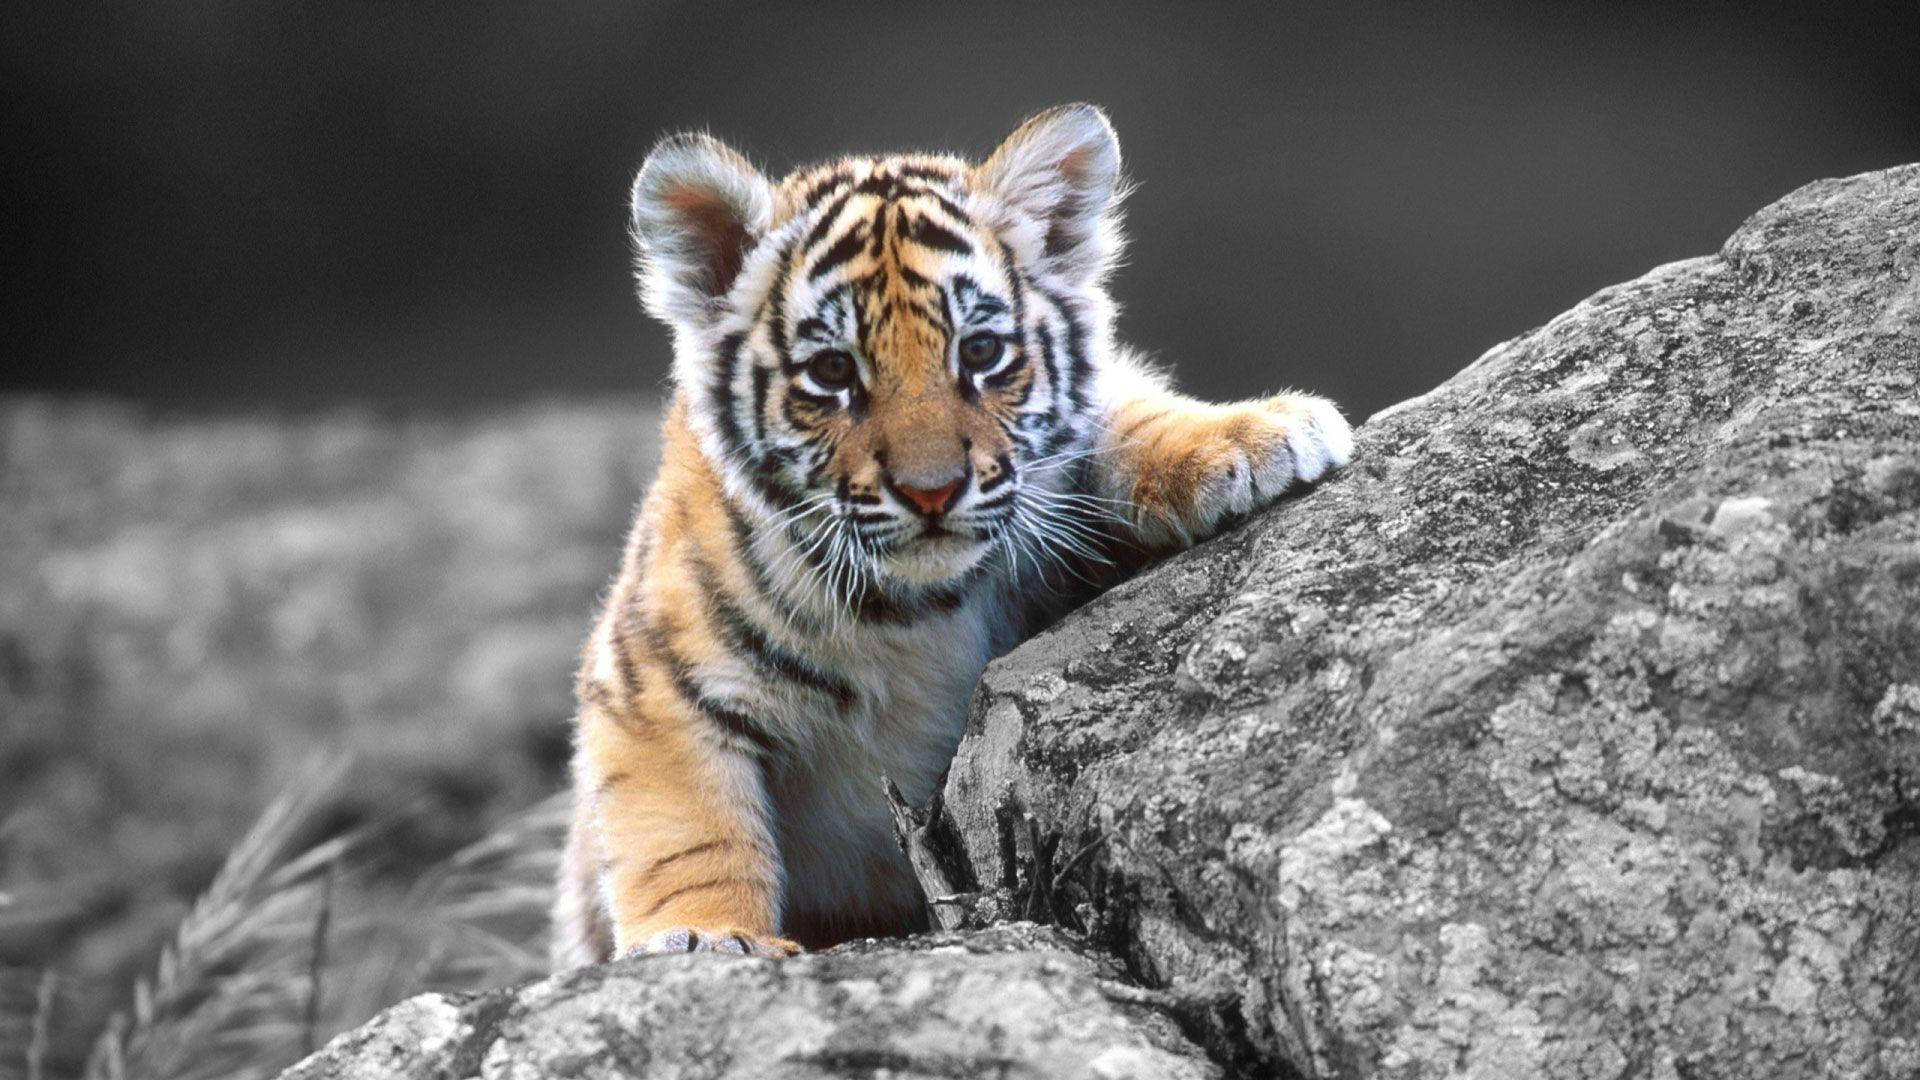 Baby Tiger At Rocks Background